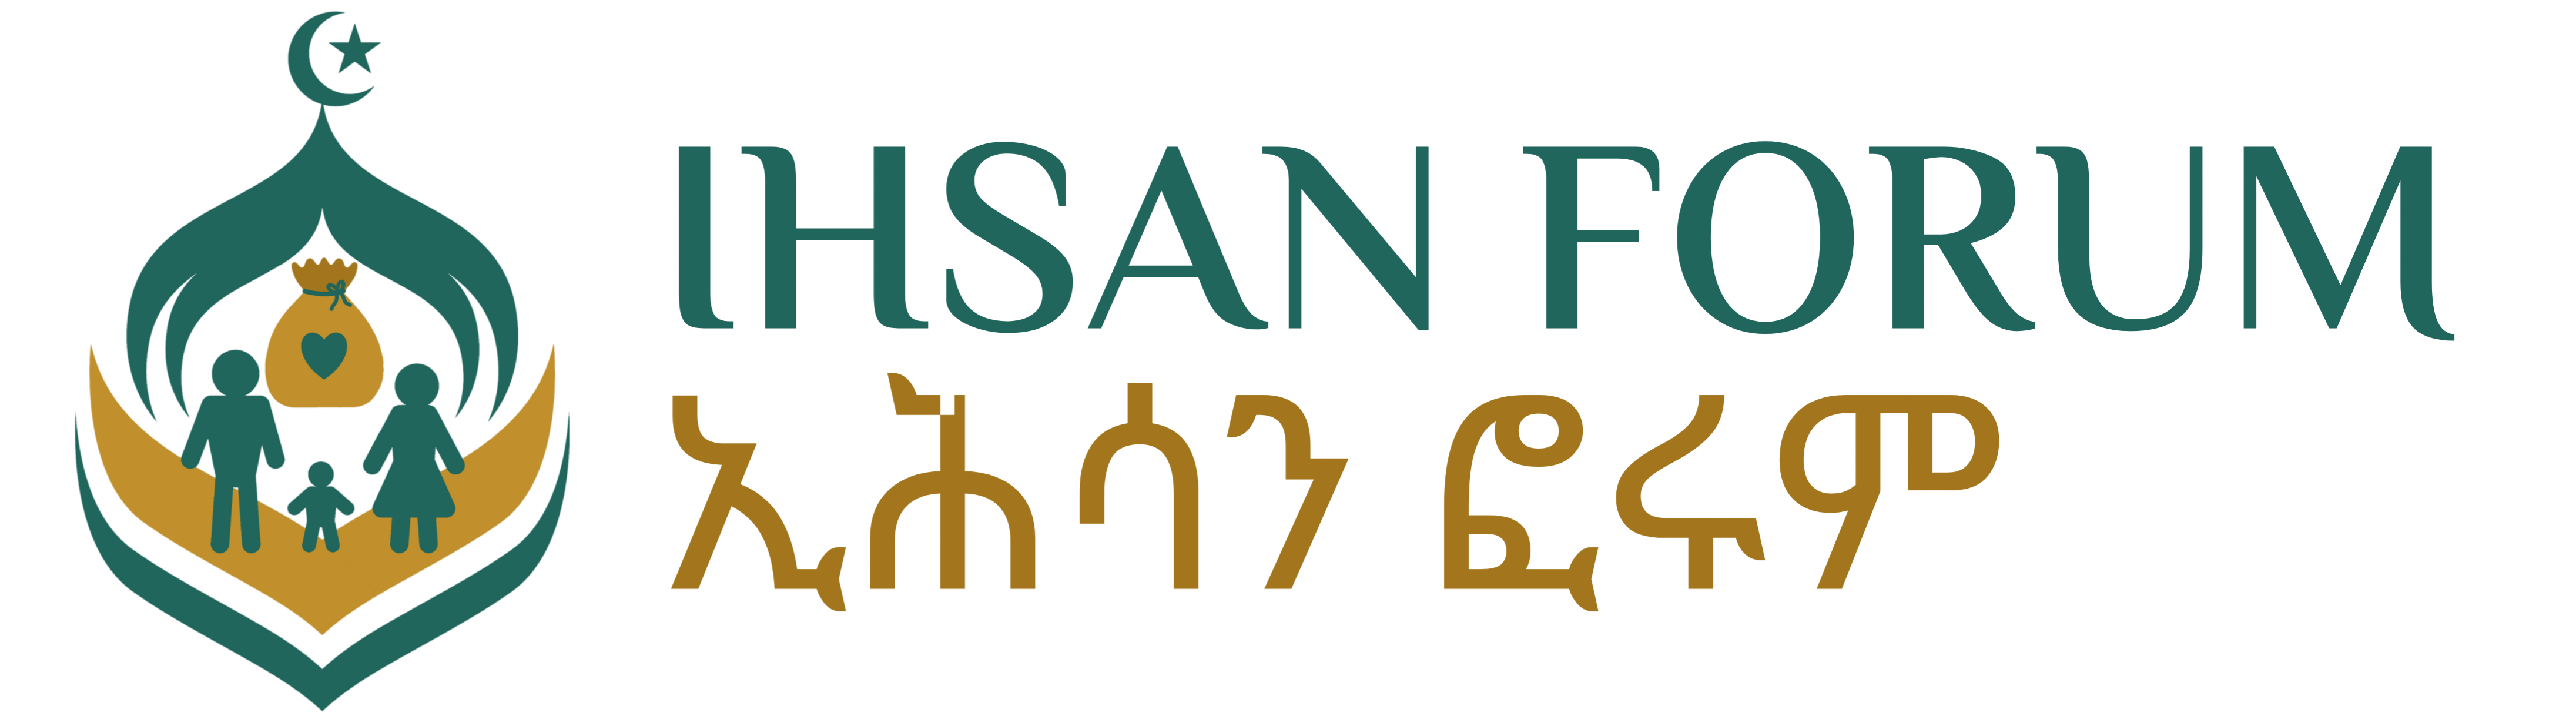 Ihsan Forum logo